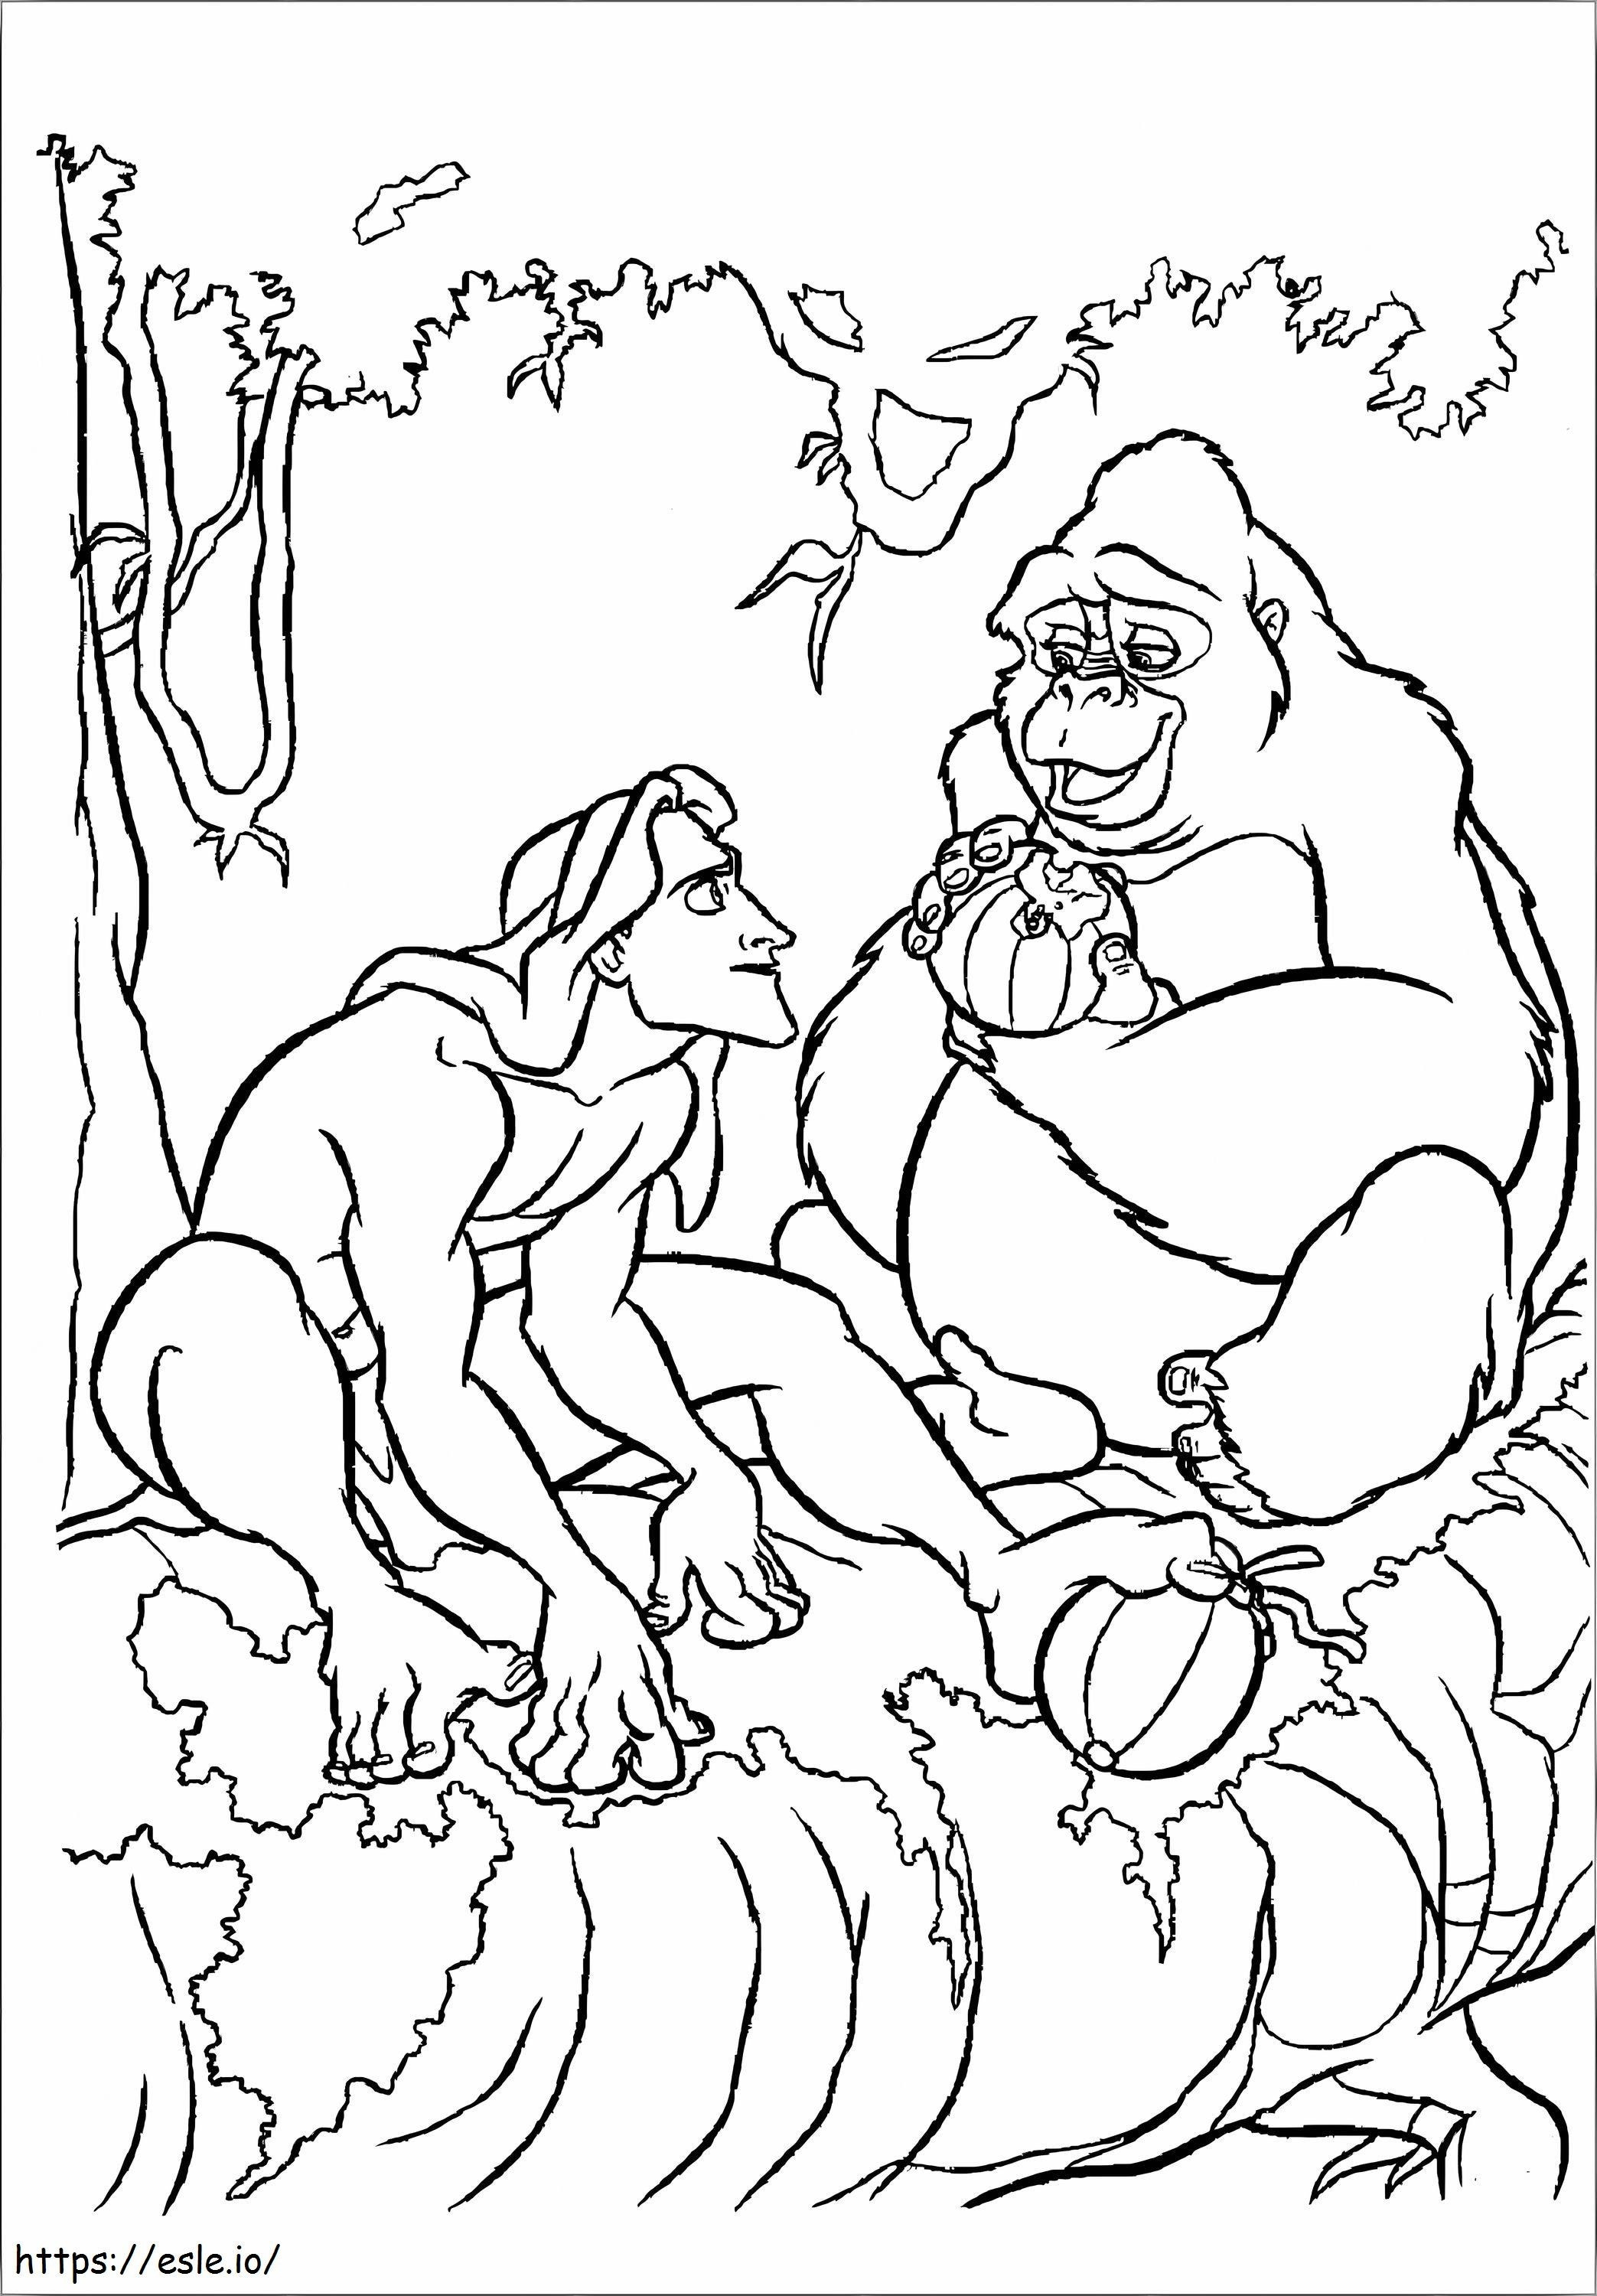 Tarzan ve Maymun boyama